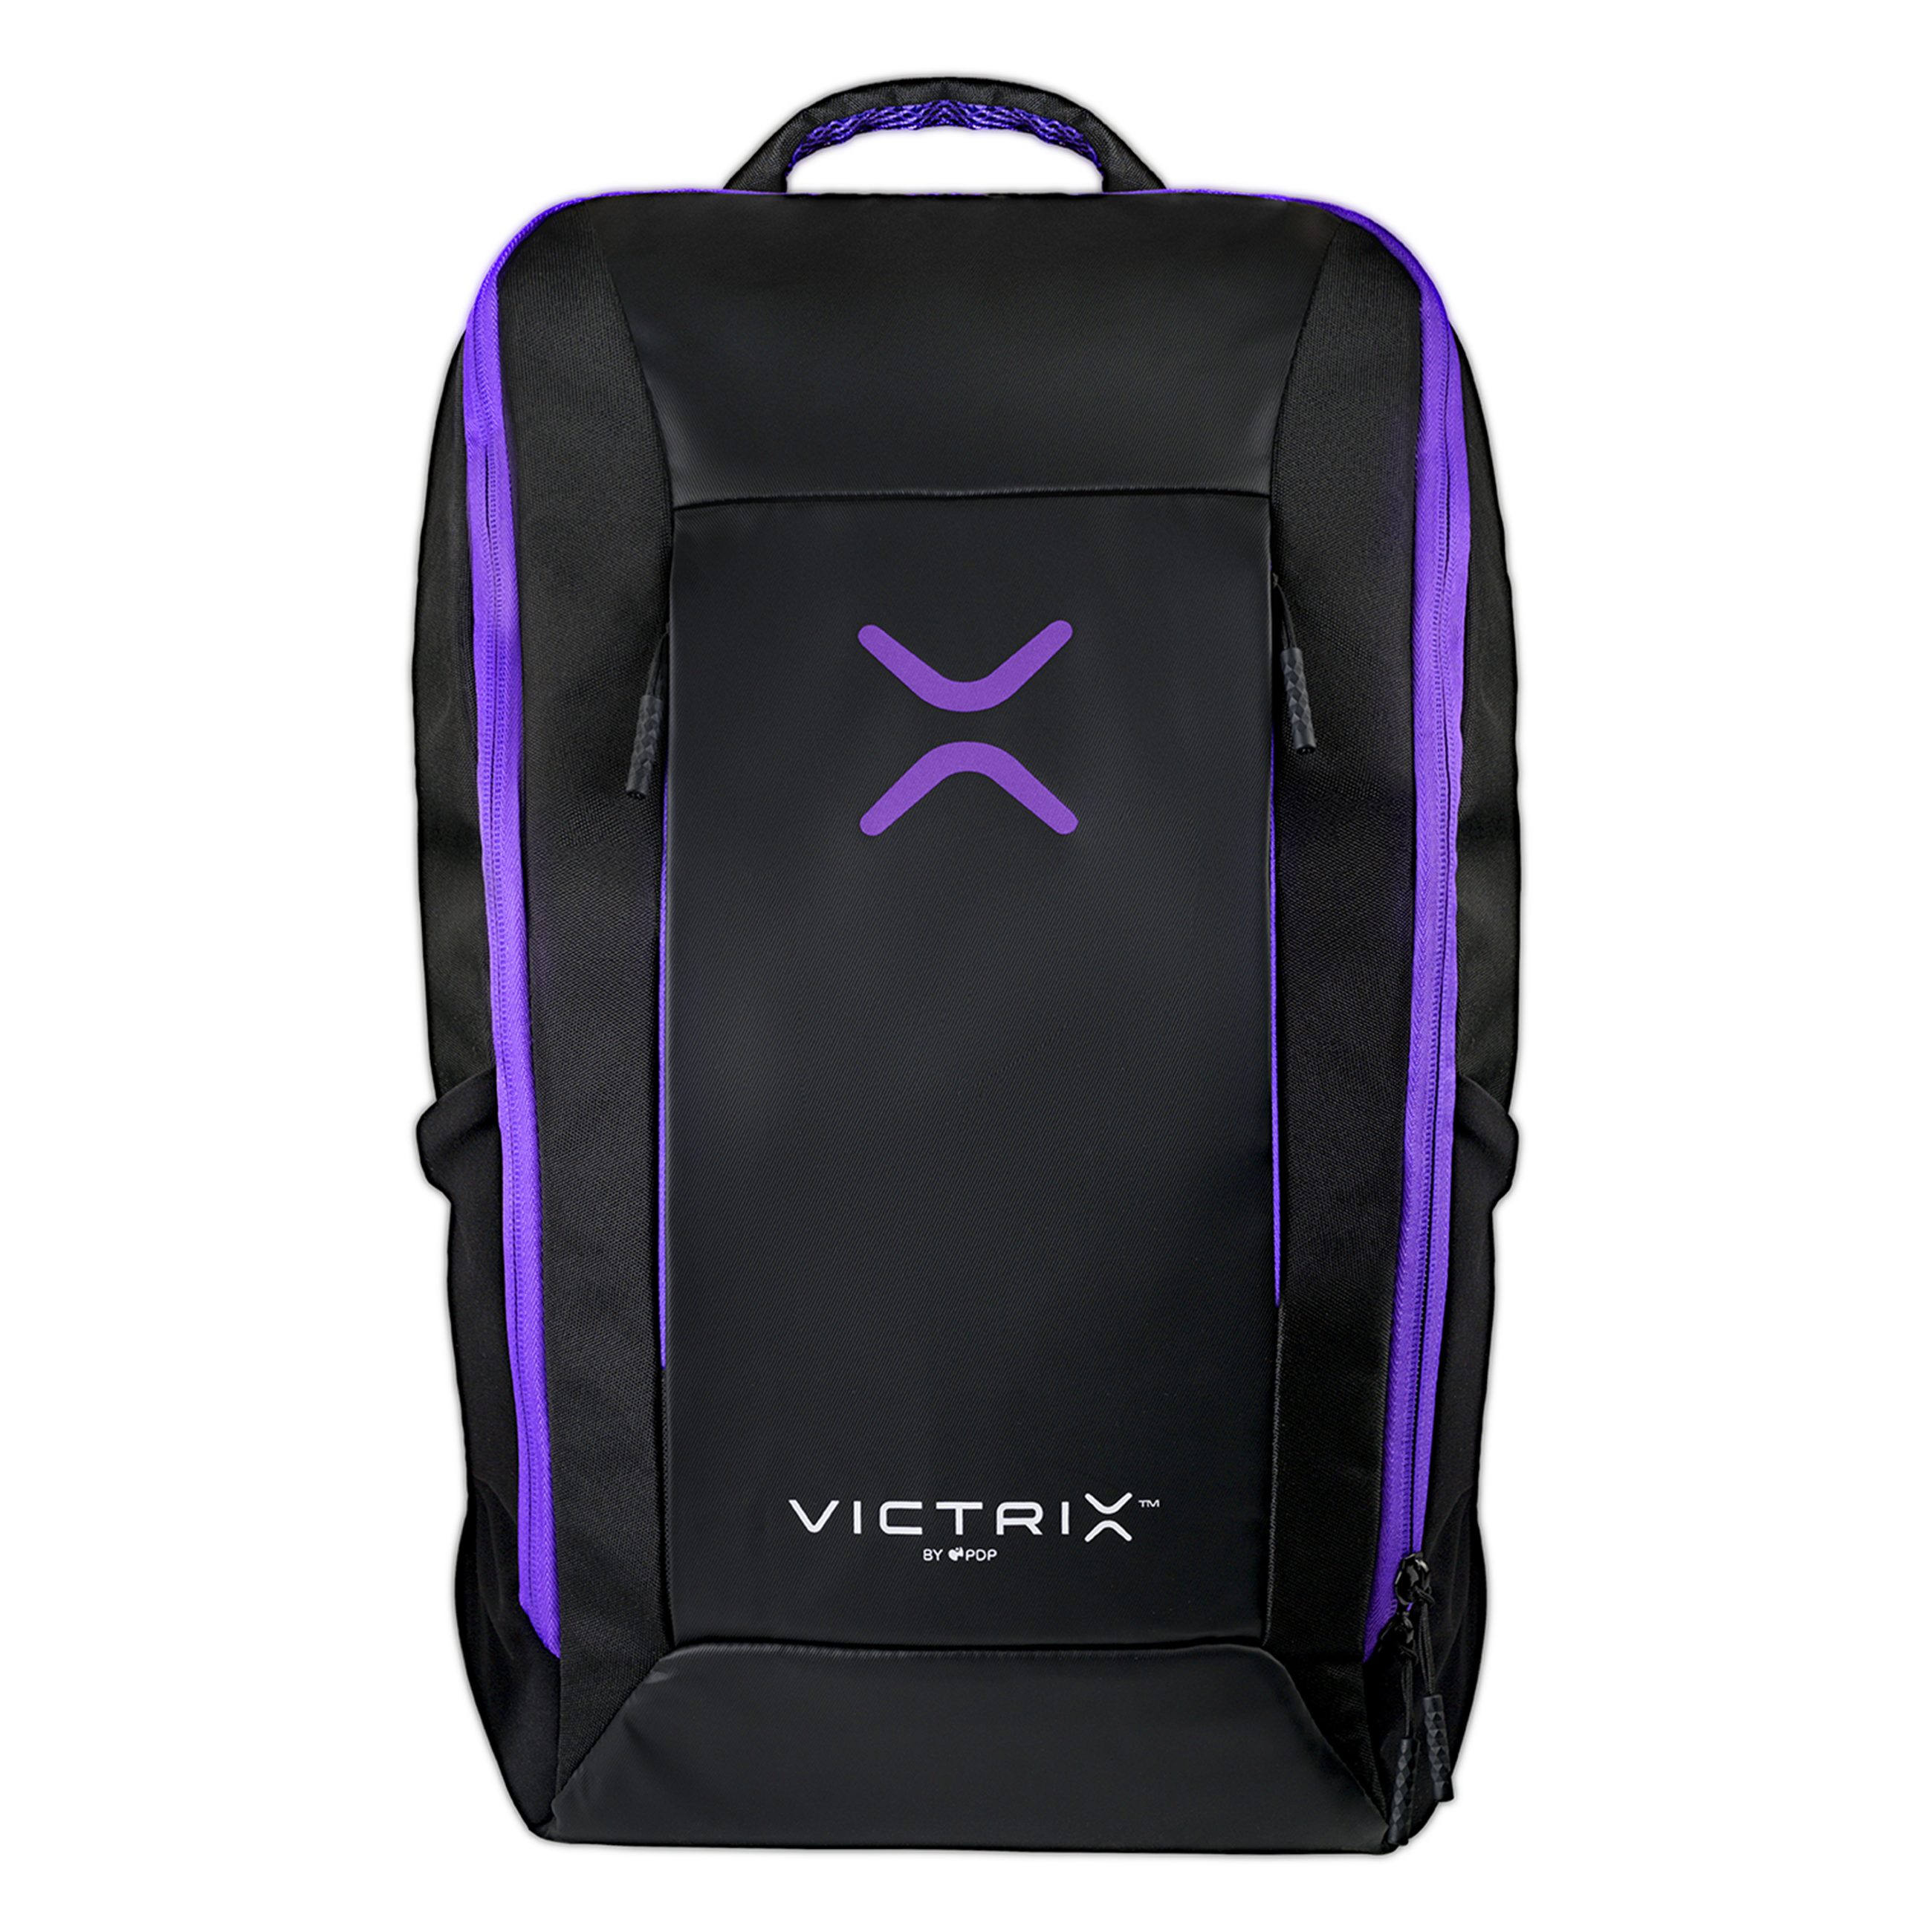 Victrix Tournament Backpack